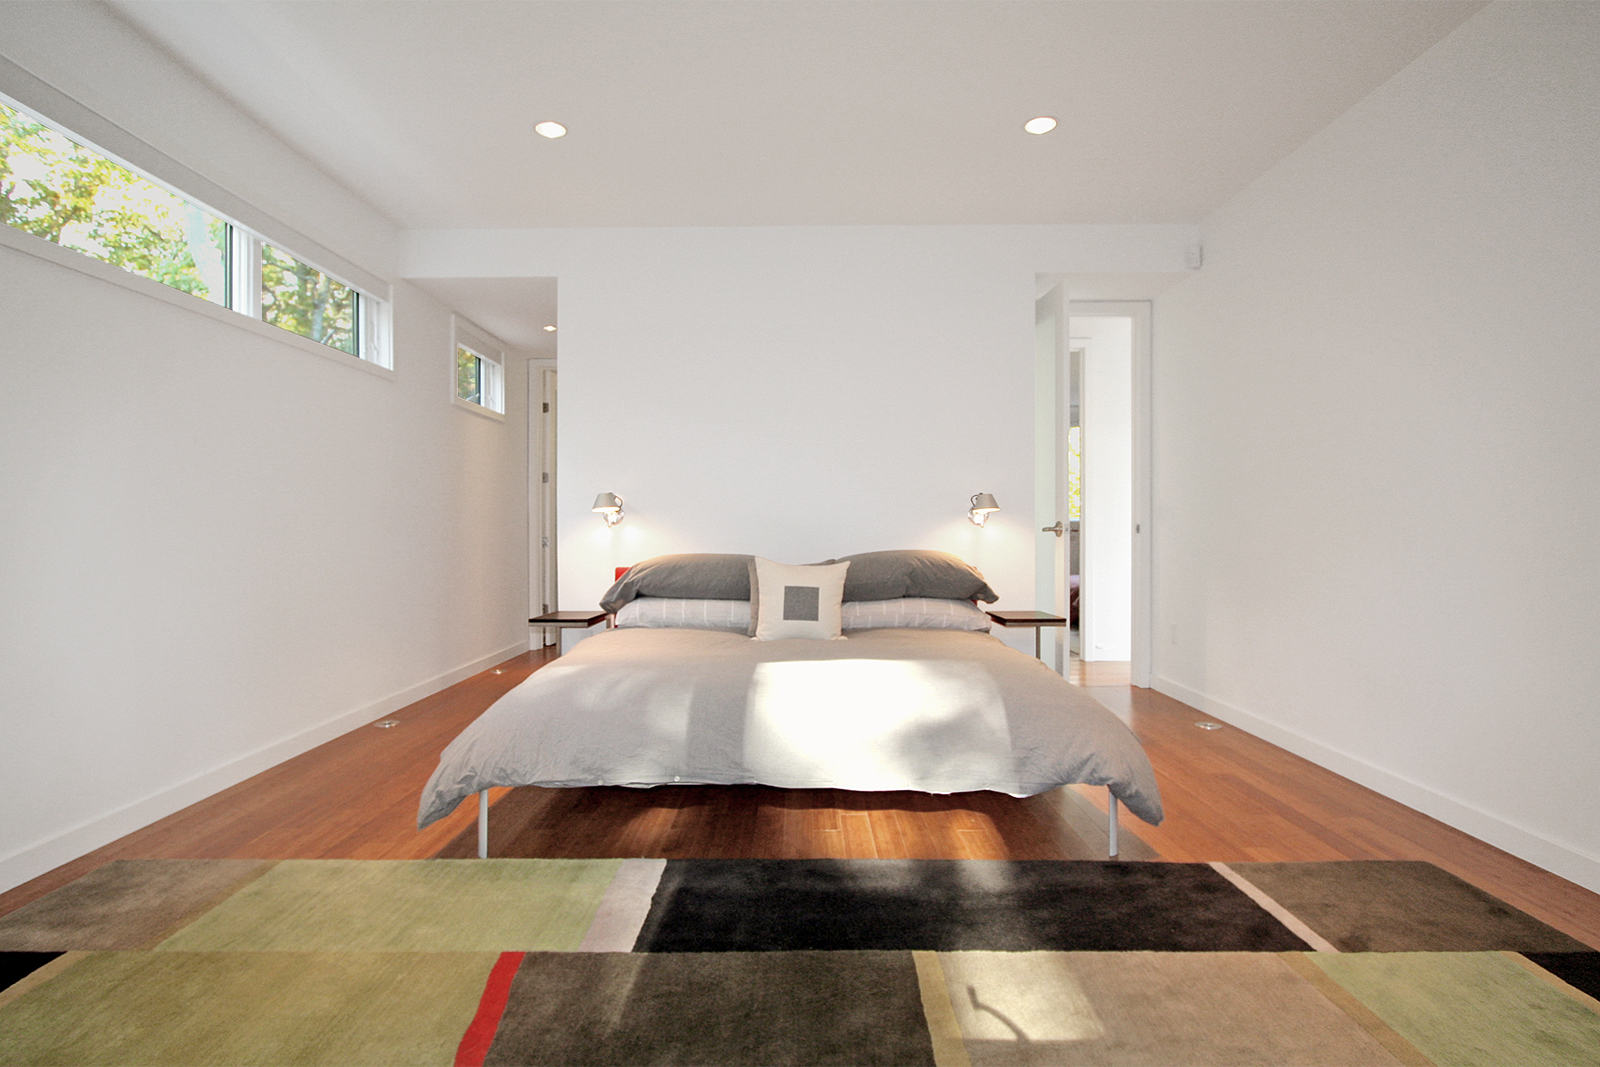 19-res4-resolution-4-architecture-modern-modular-home-prefab-house-swingline-interior-bed-room.jpg